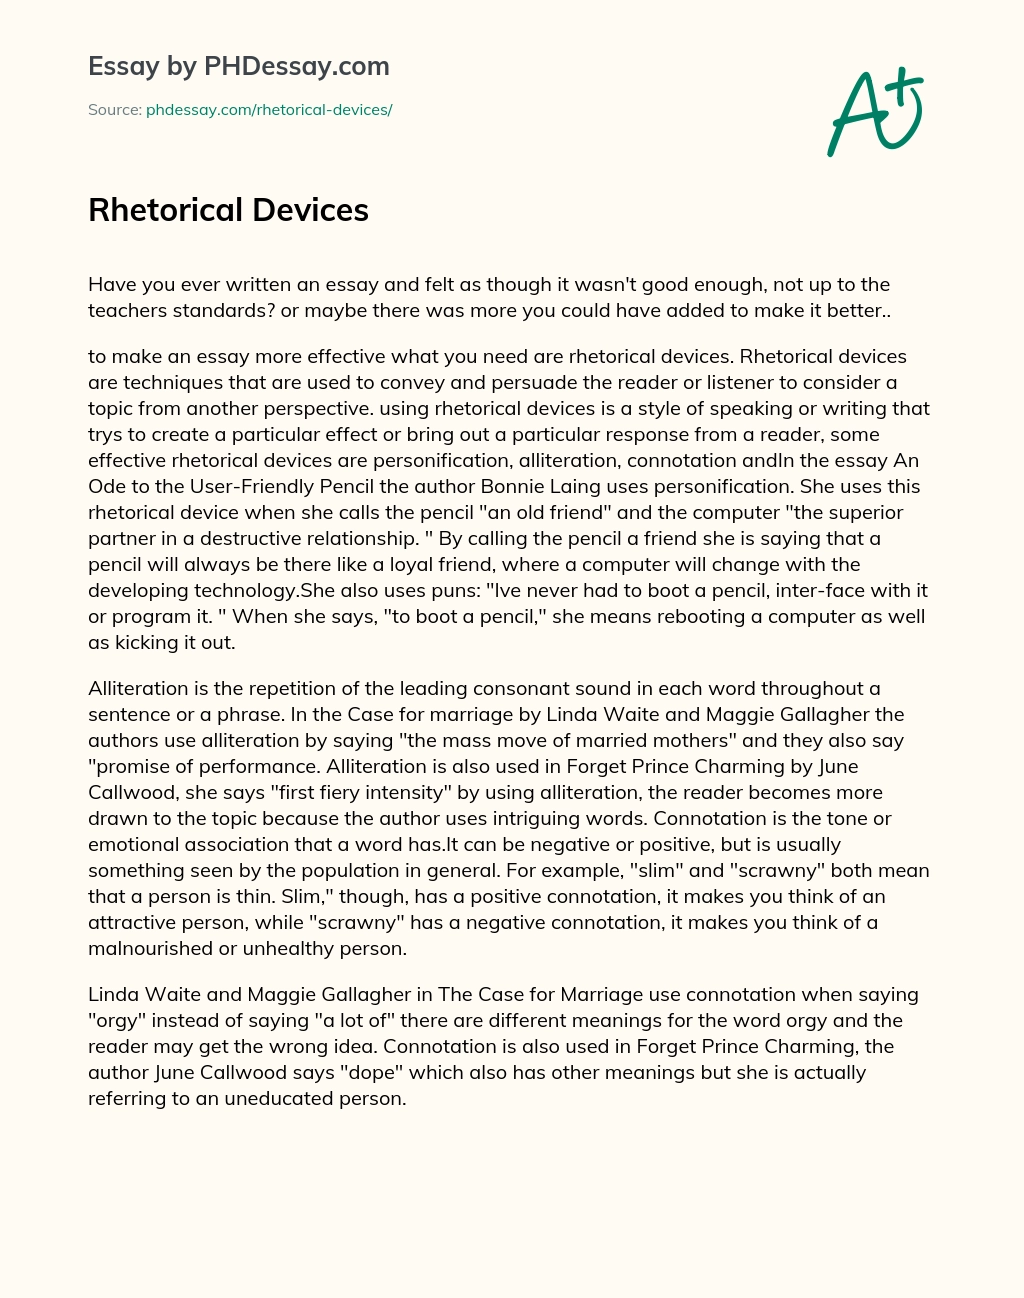 Rhetorical Devices essay